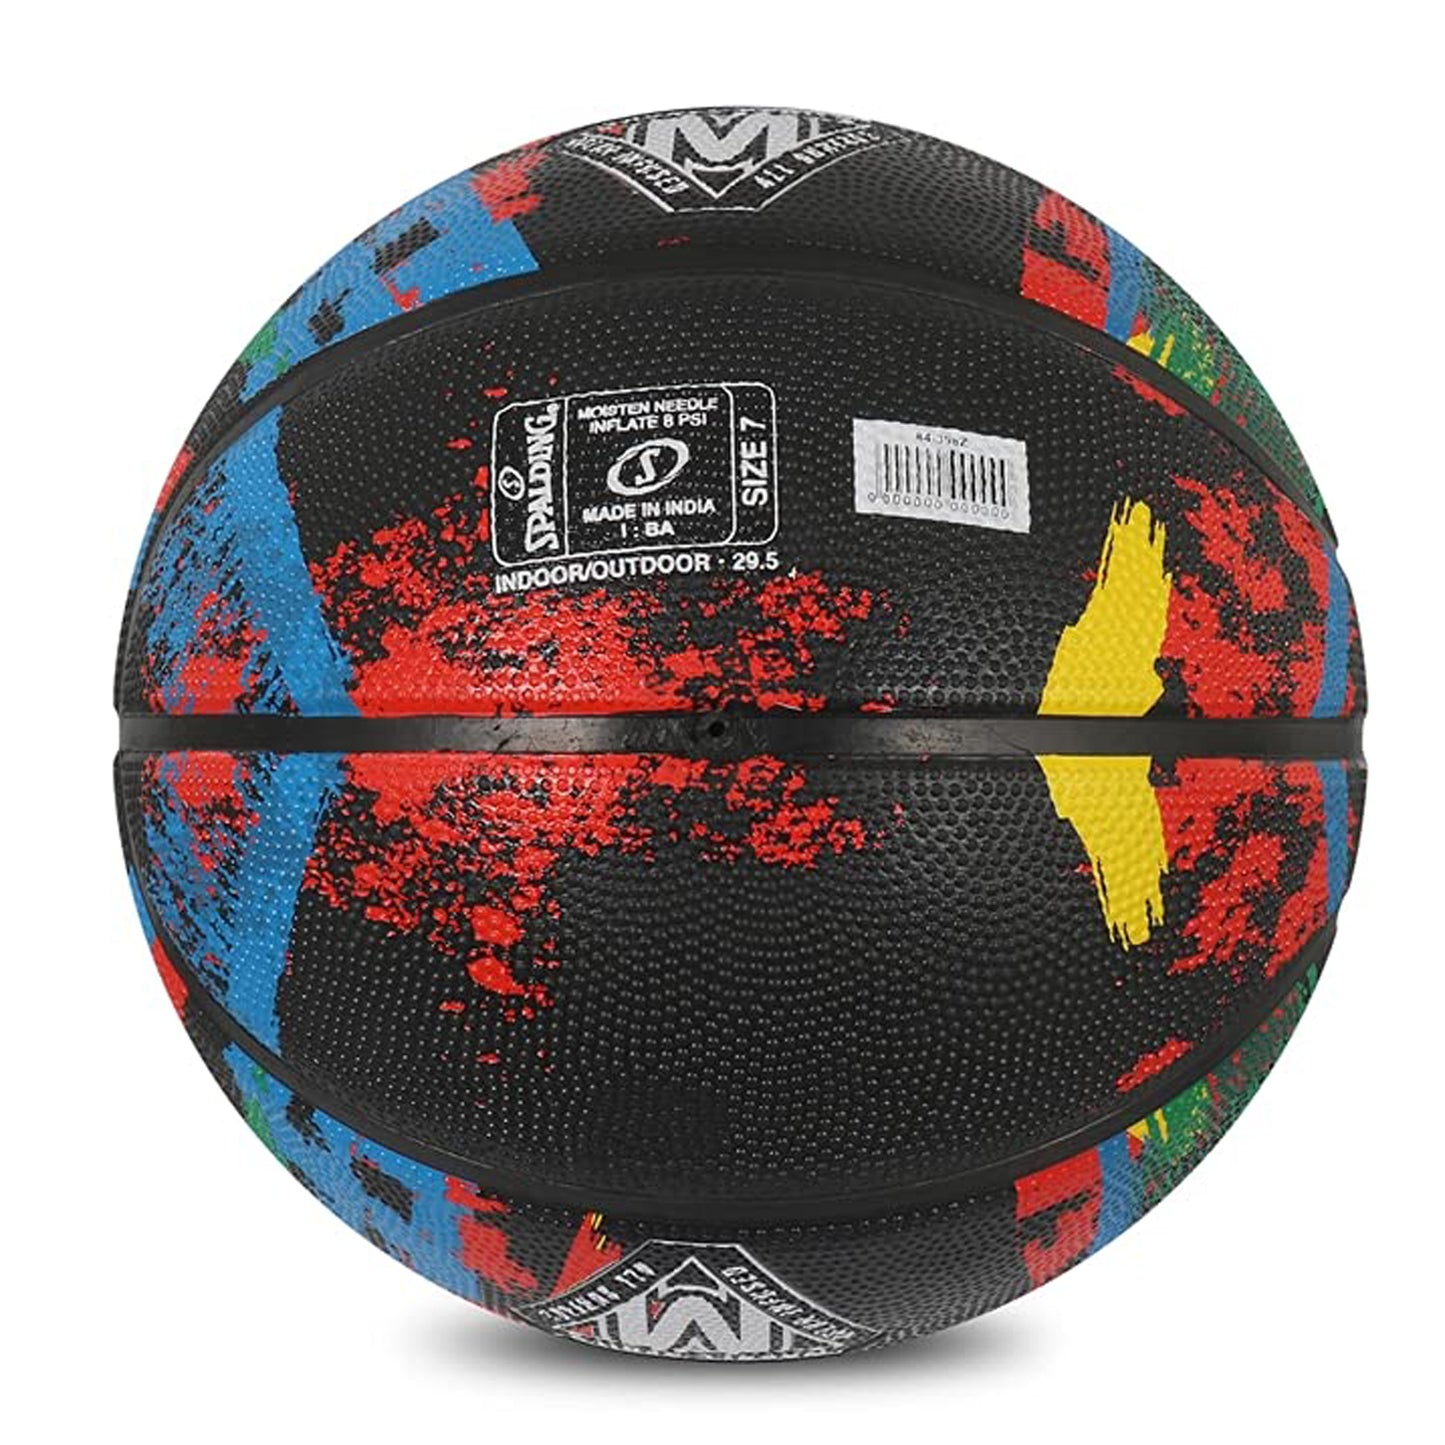 Spalding Marble Basketball ,Black/Red, Size 7 - Best Price online Prokicksports.com